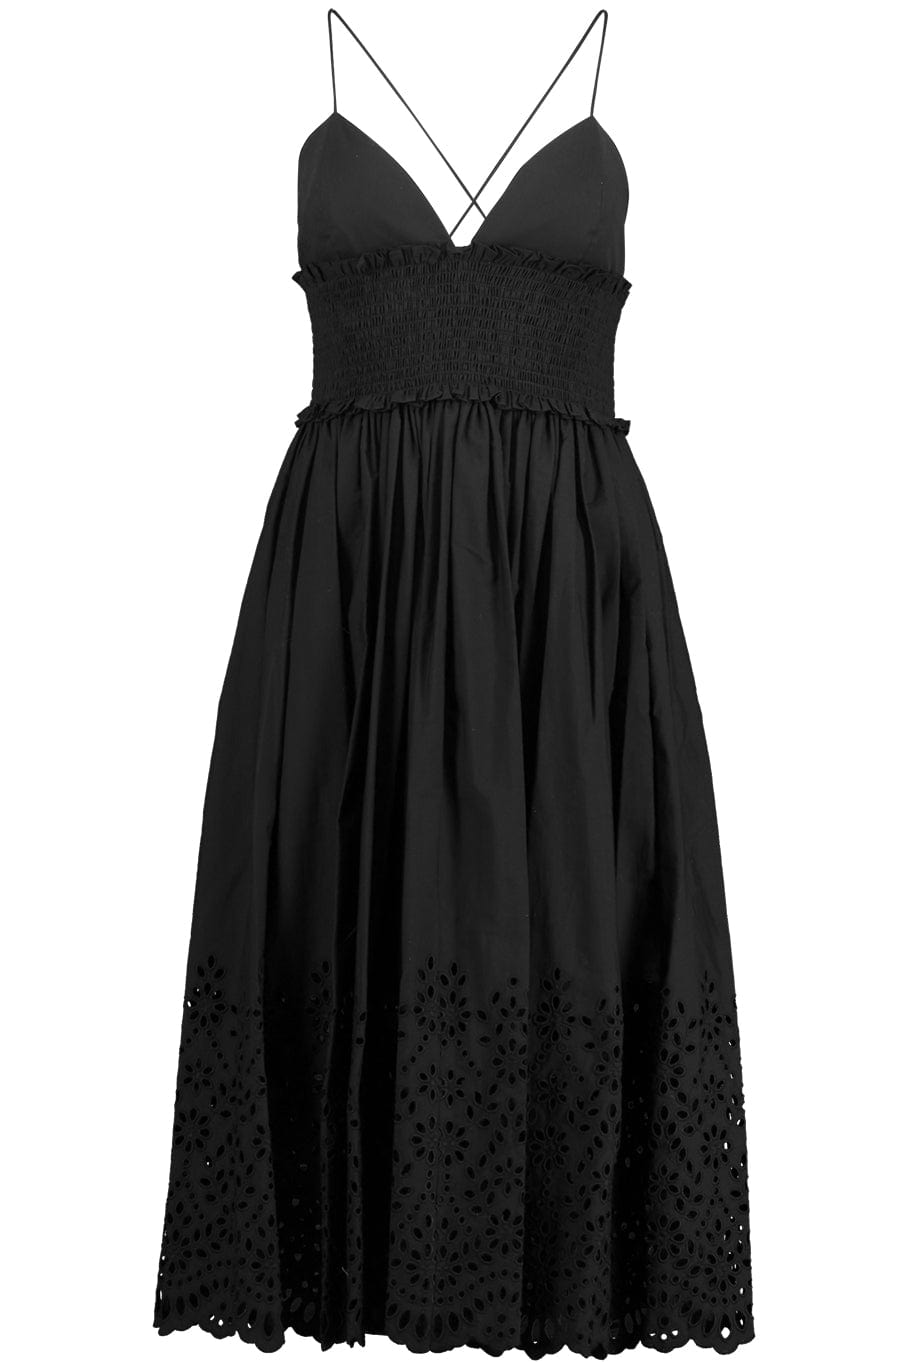 MICHAEL KORS-Spaghetti Strap Dance Dress - Black-BLACK